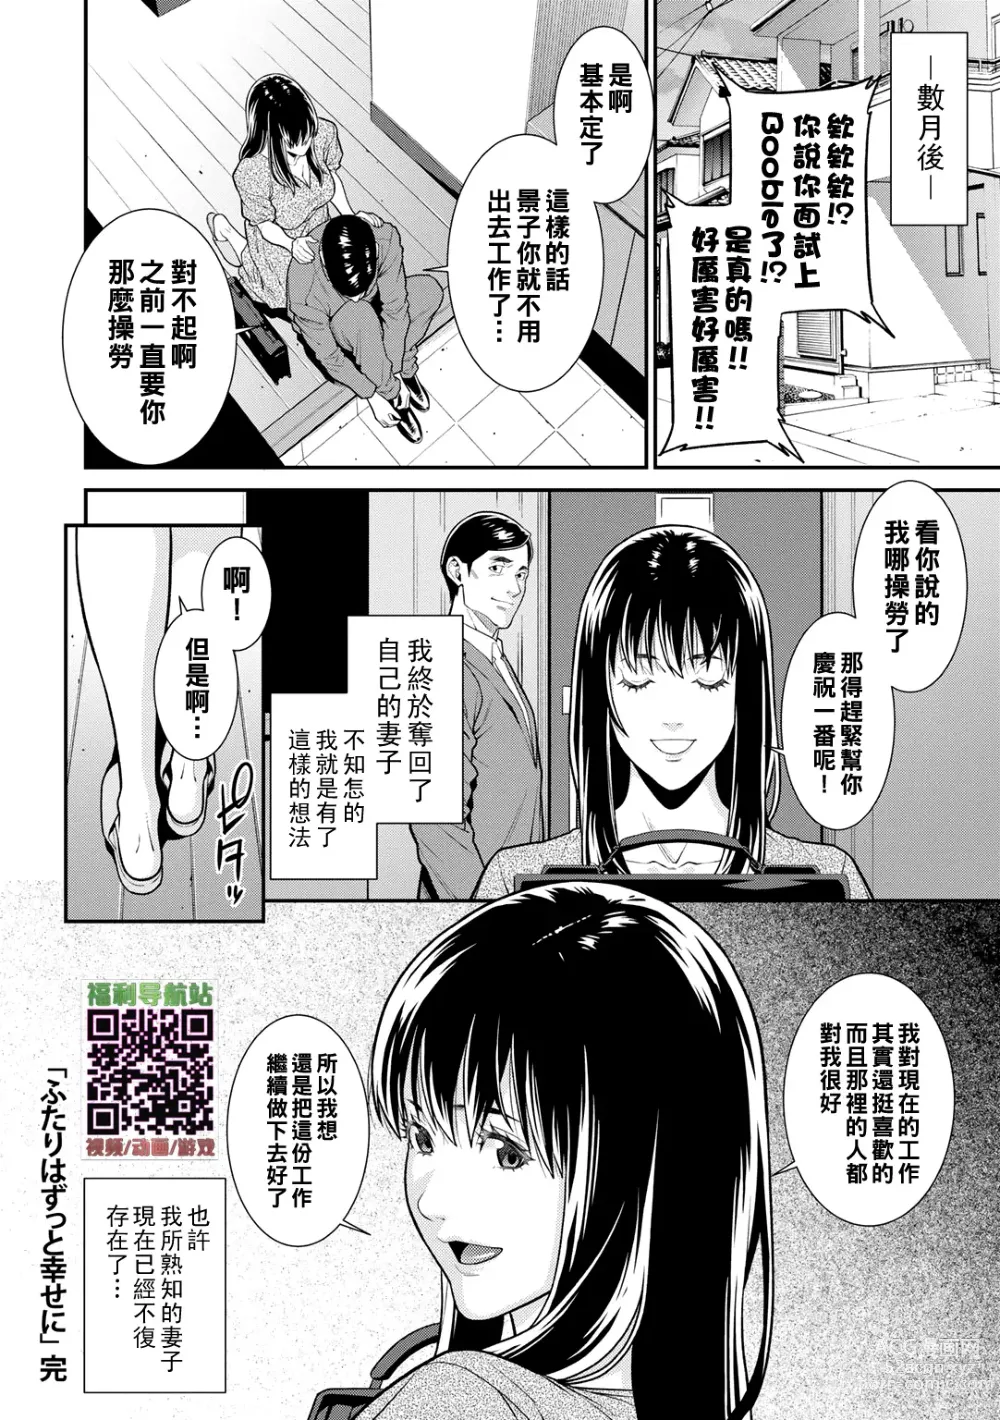 Page 29 of manga Onna ni Kagi wa Kakerarenai